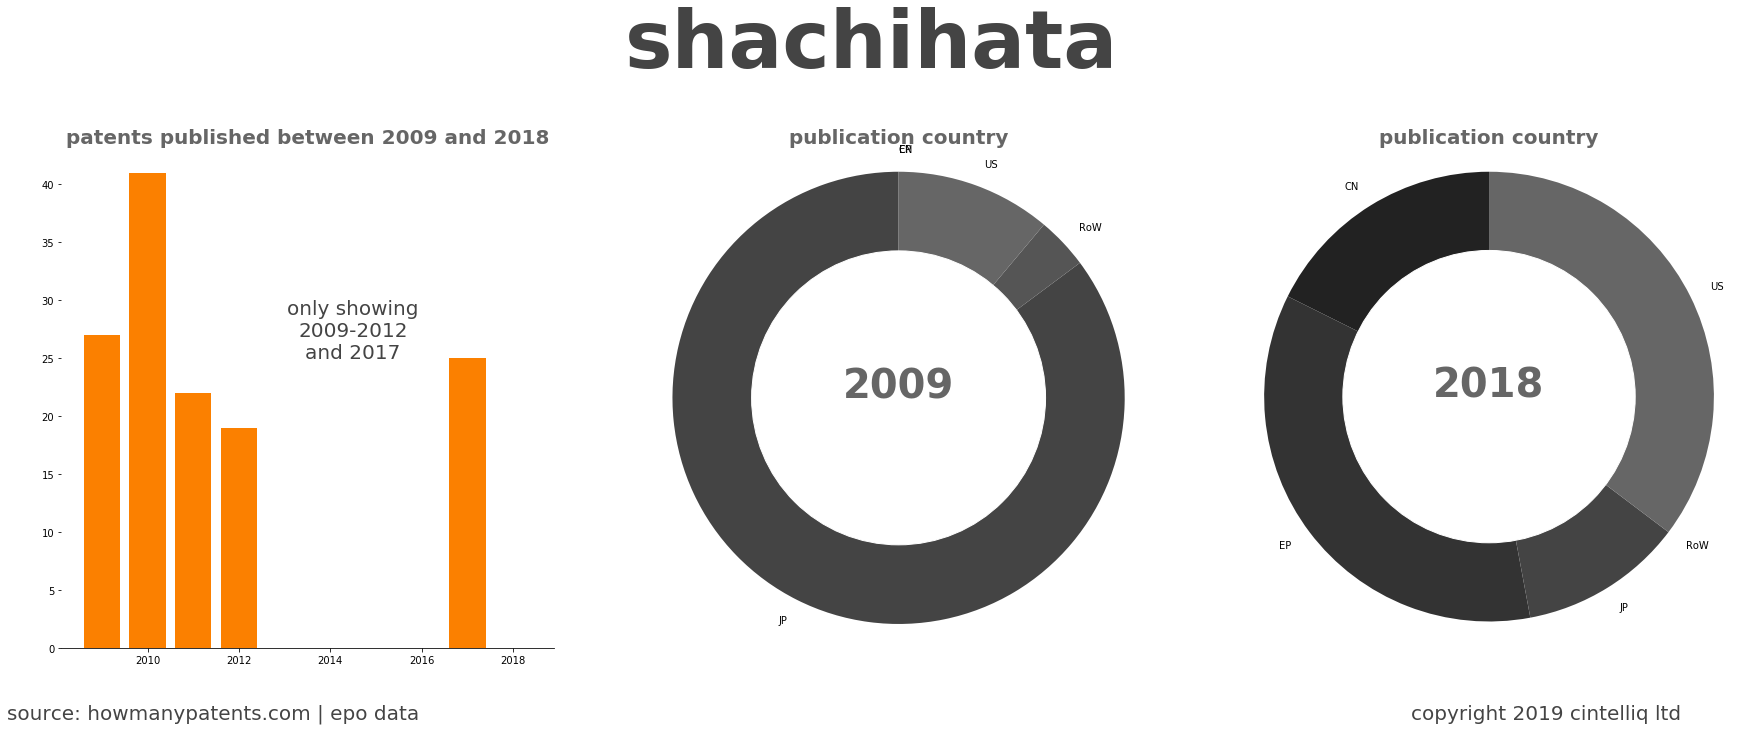 summary of patents for Shachihata